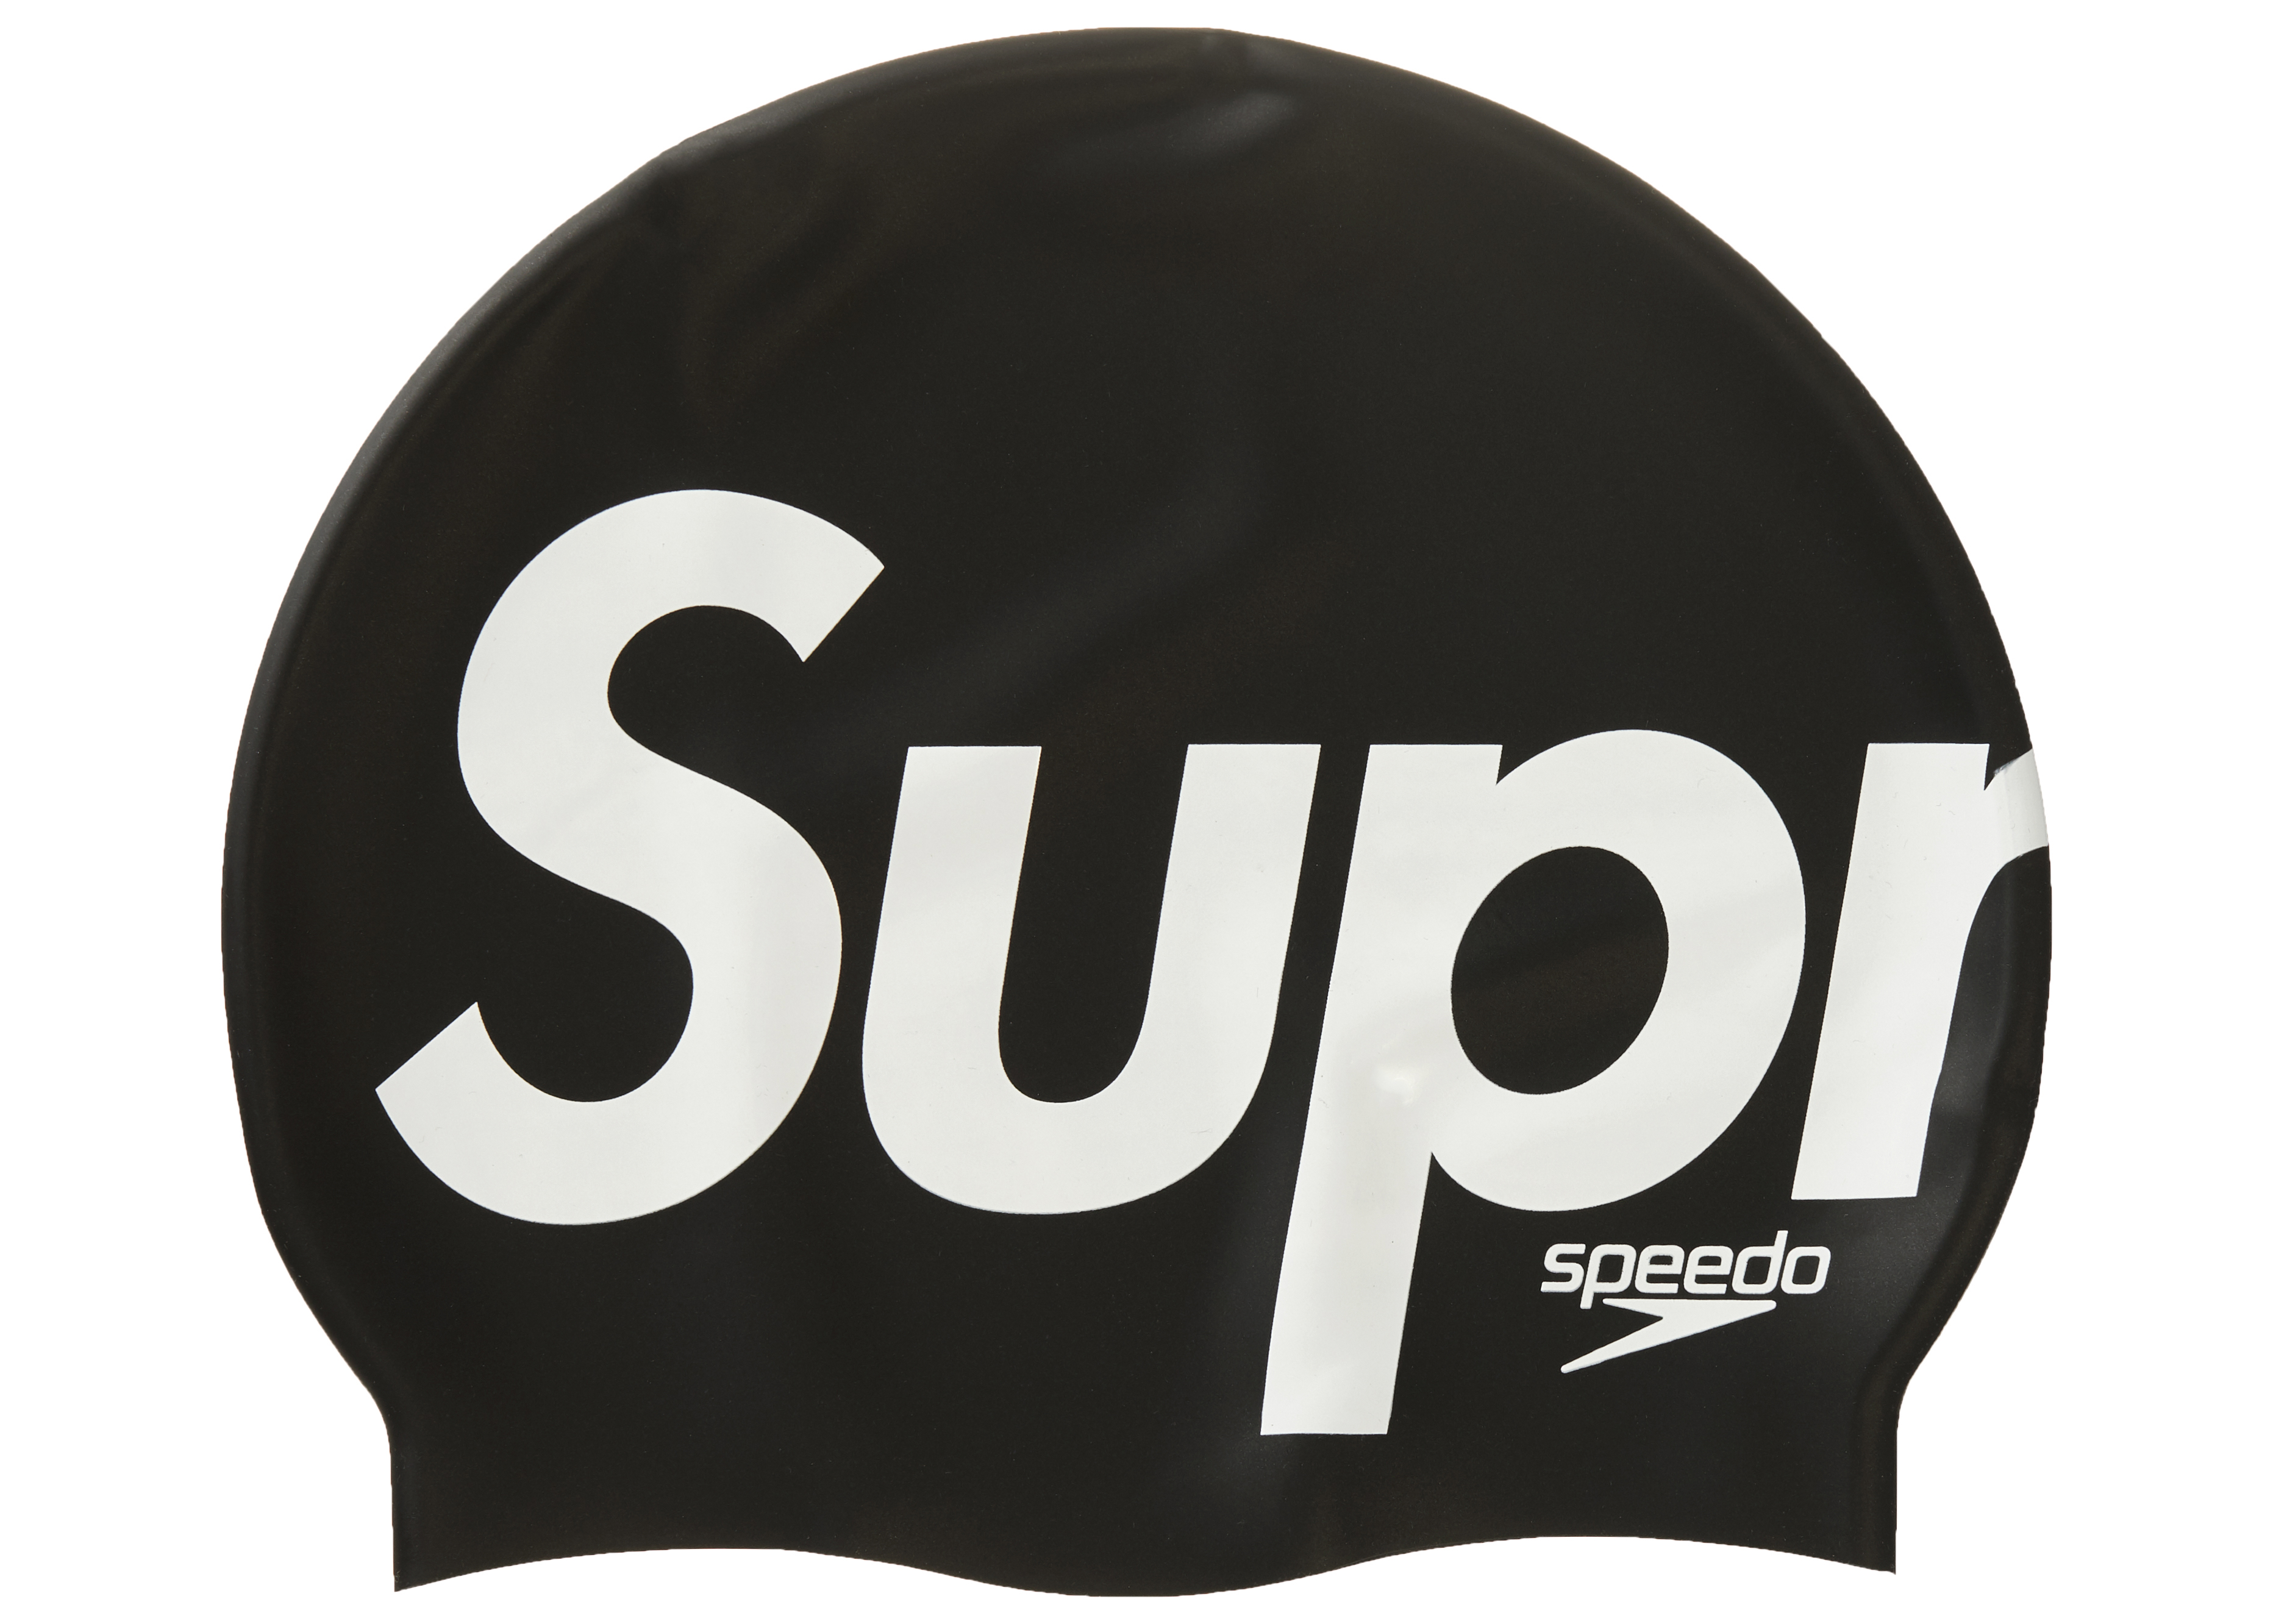 Supreme®/Speedo® Swim Cap